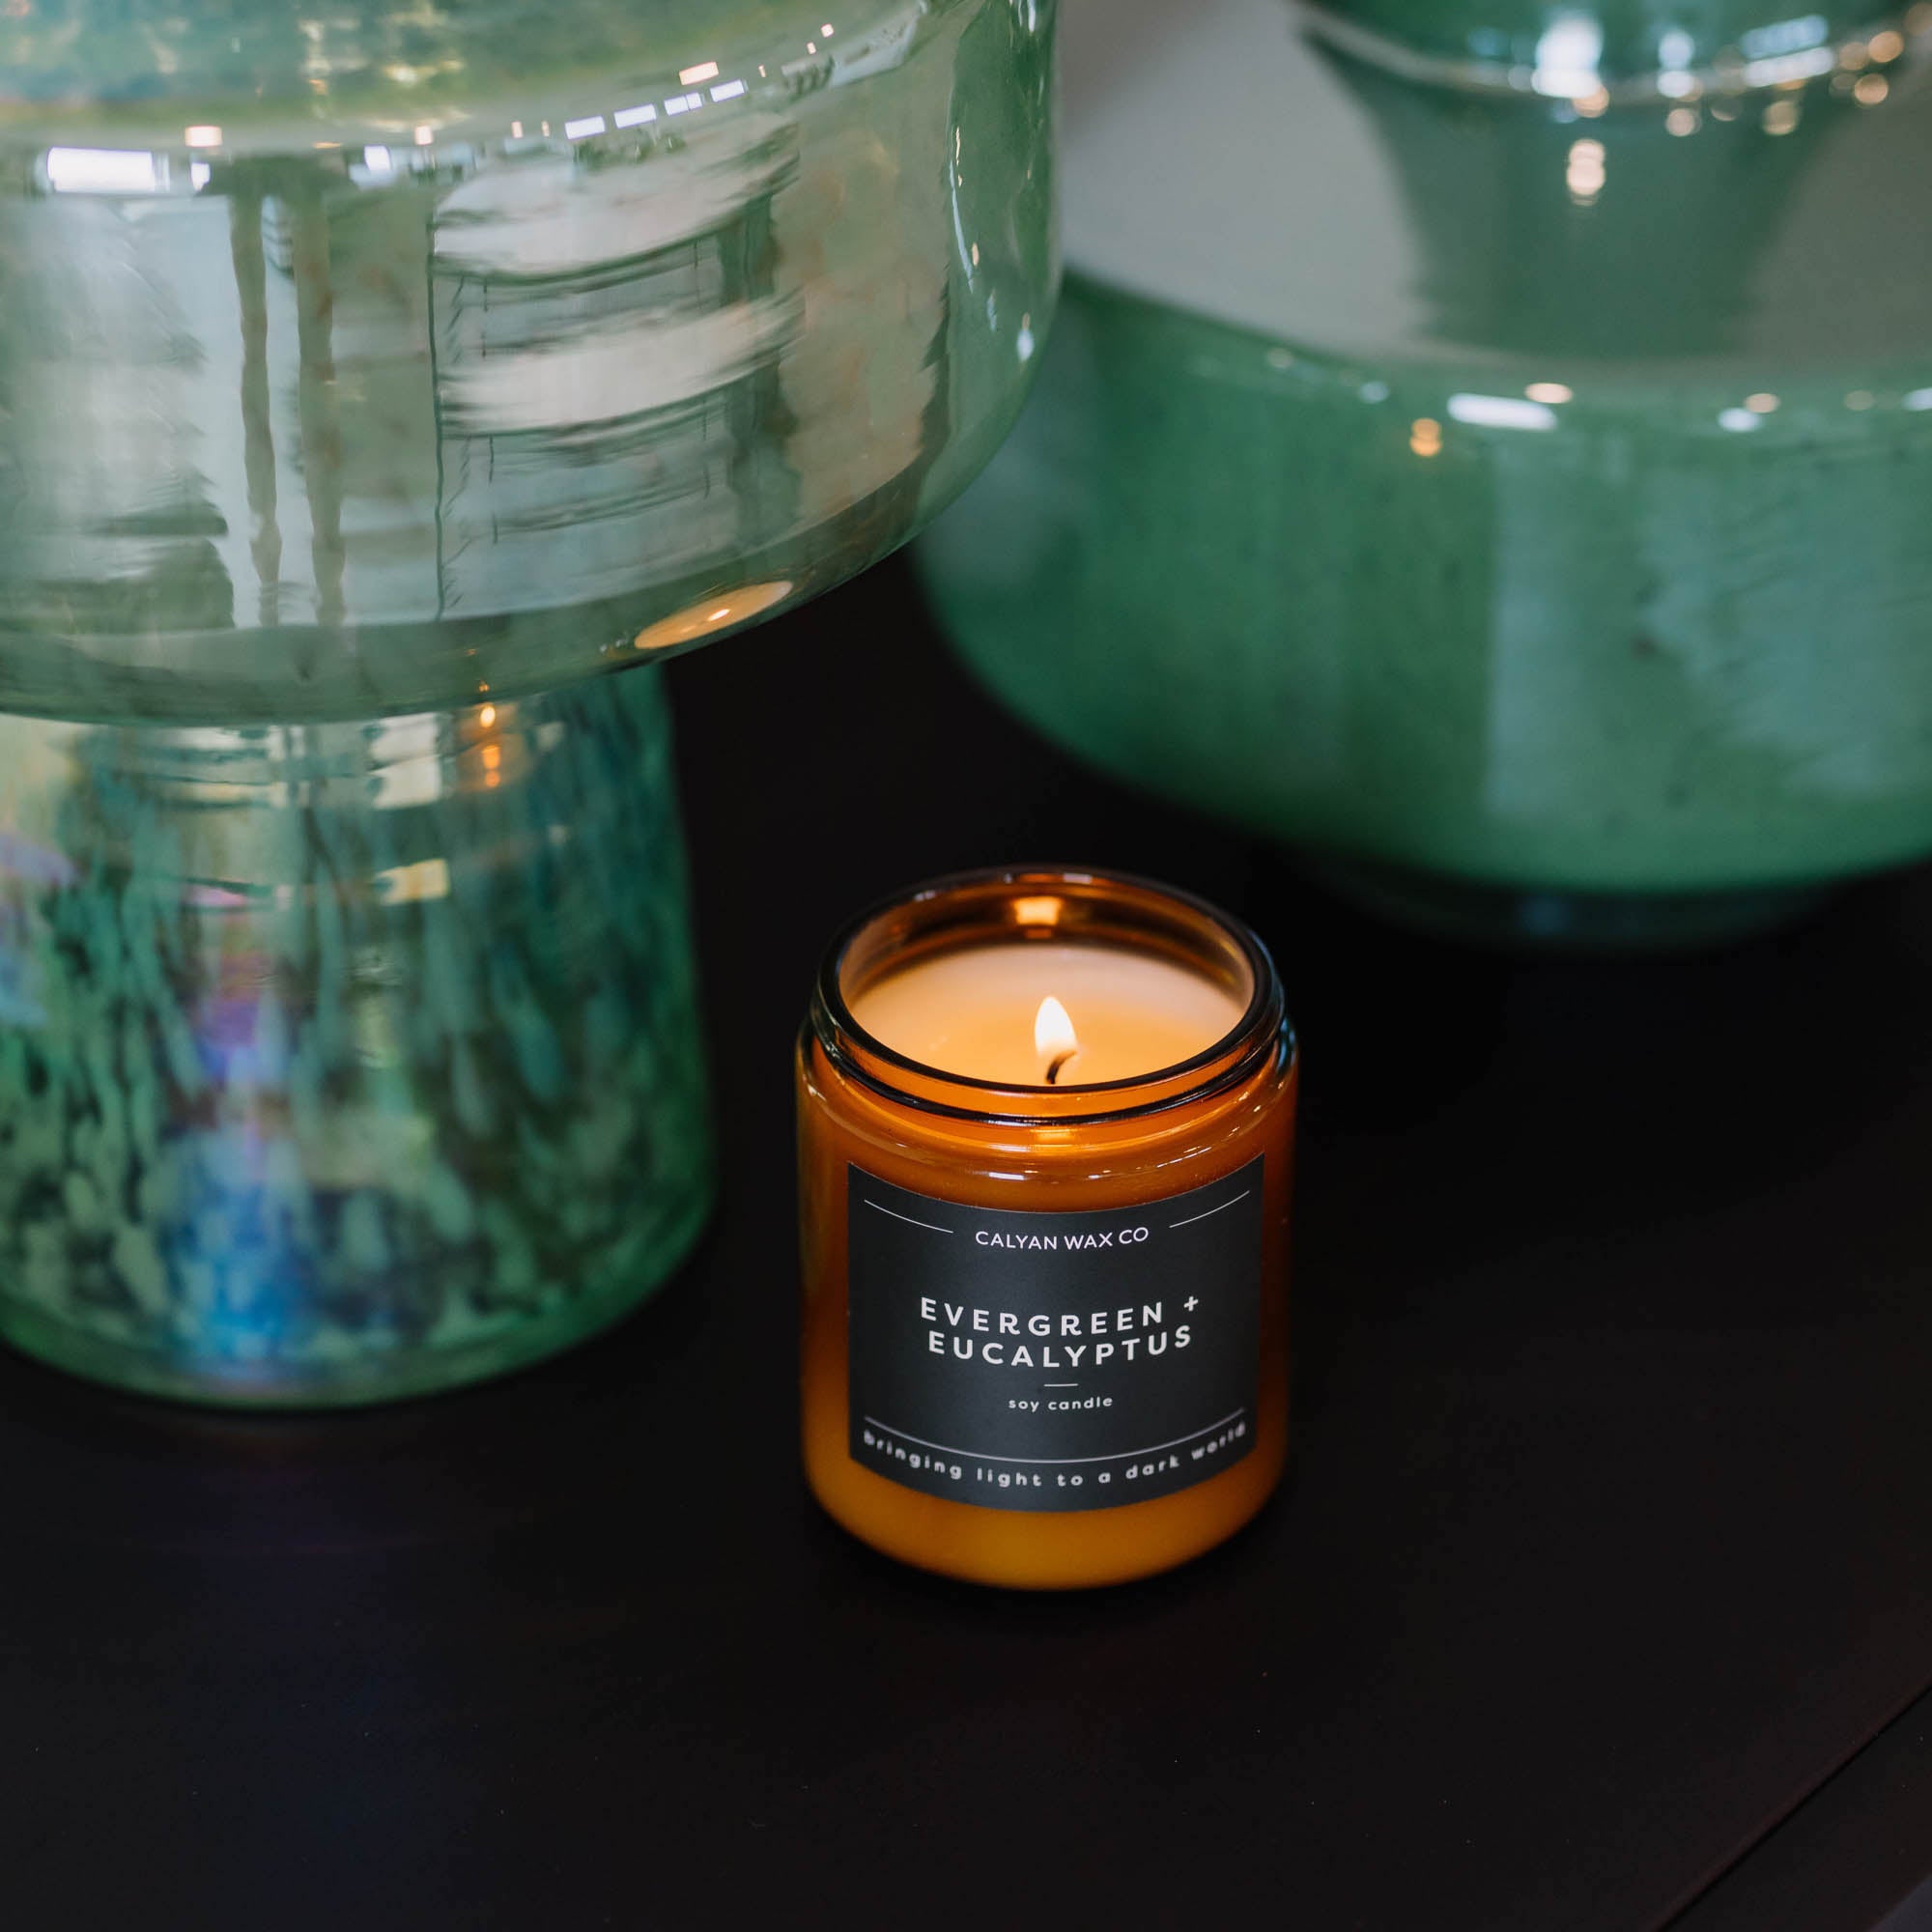 Evergreen + Eucalyptus Soy Candle in a Glass Tumbler - Calyan Wax Co.